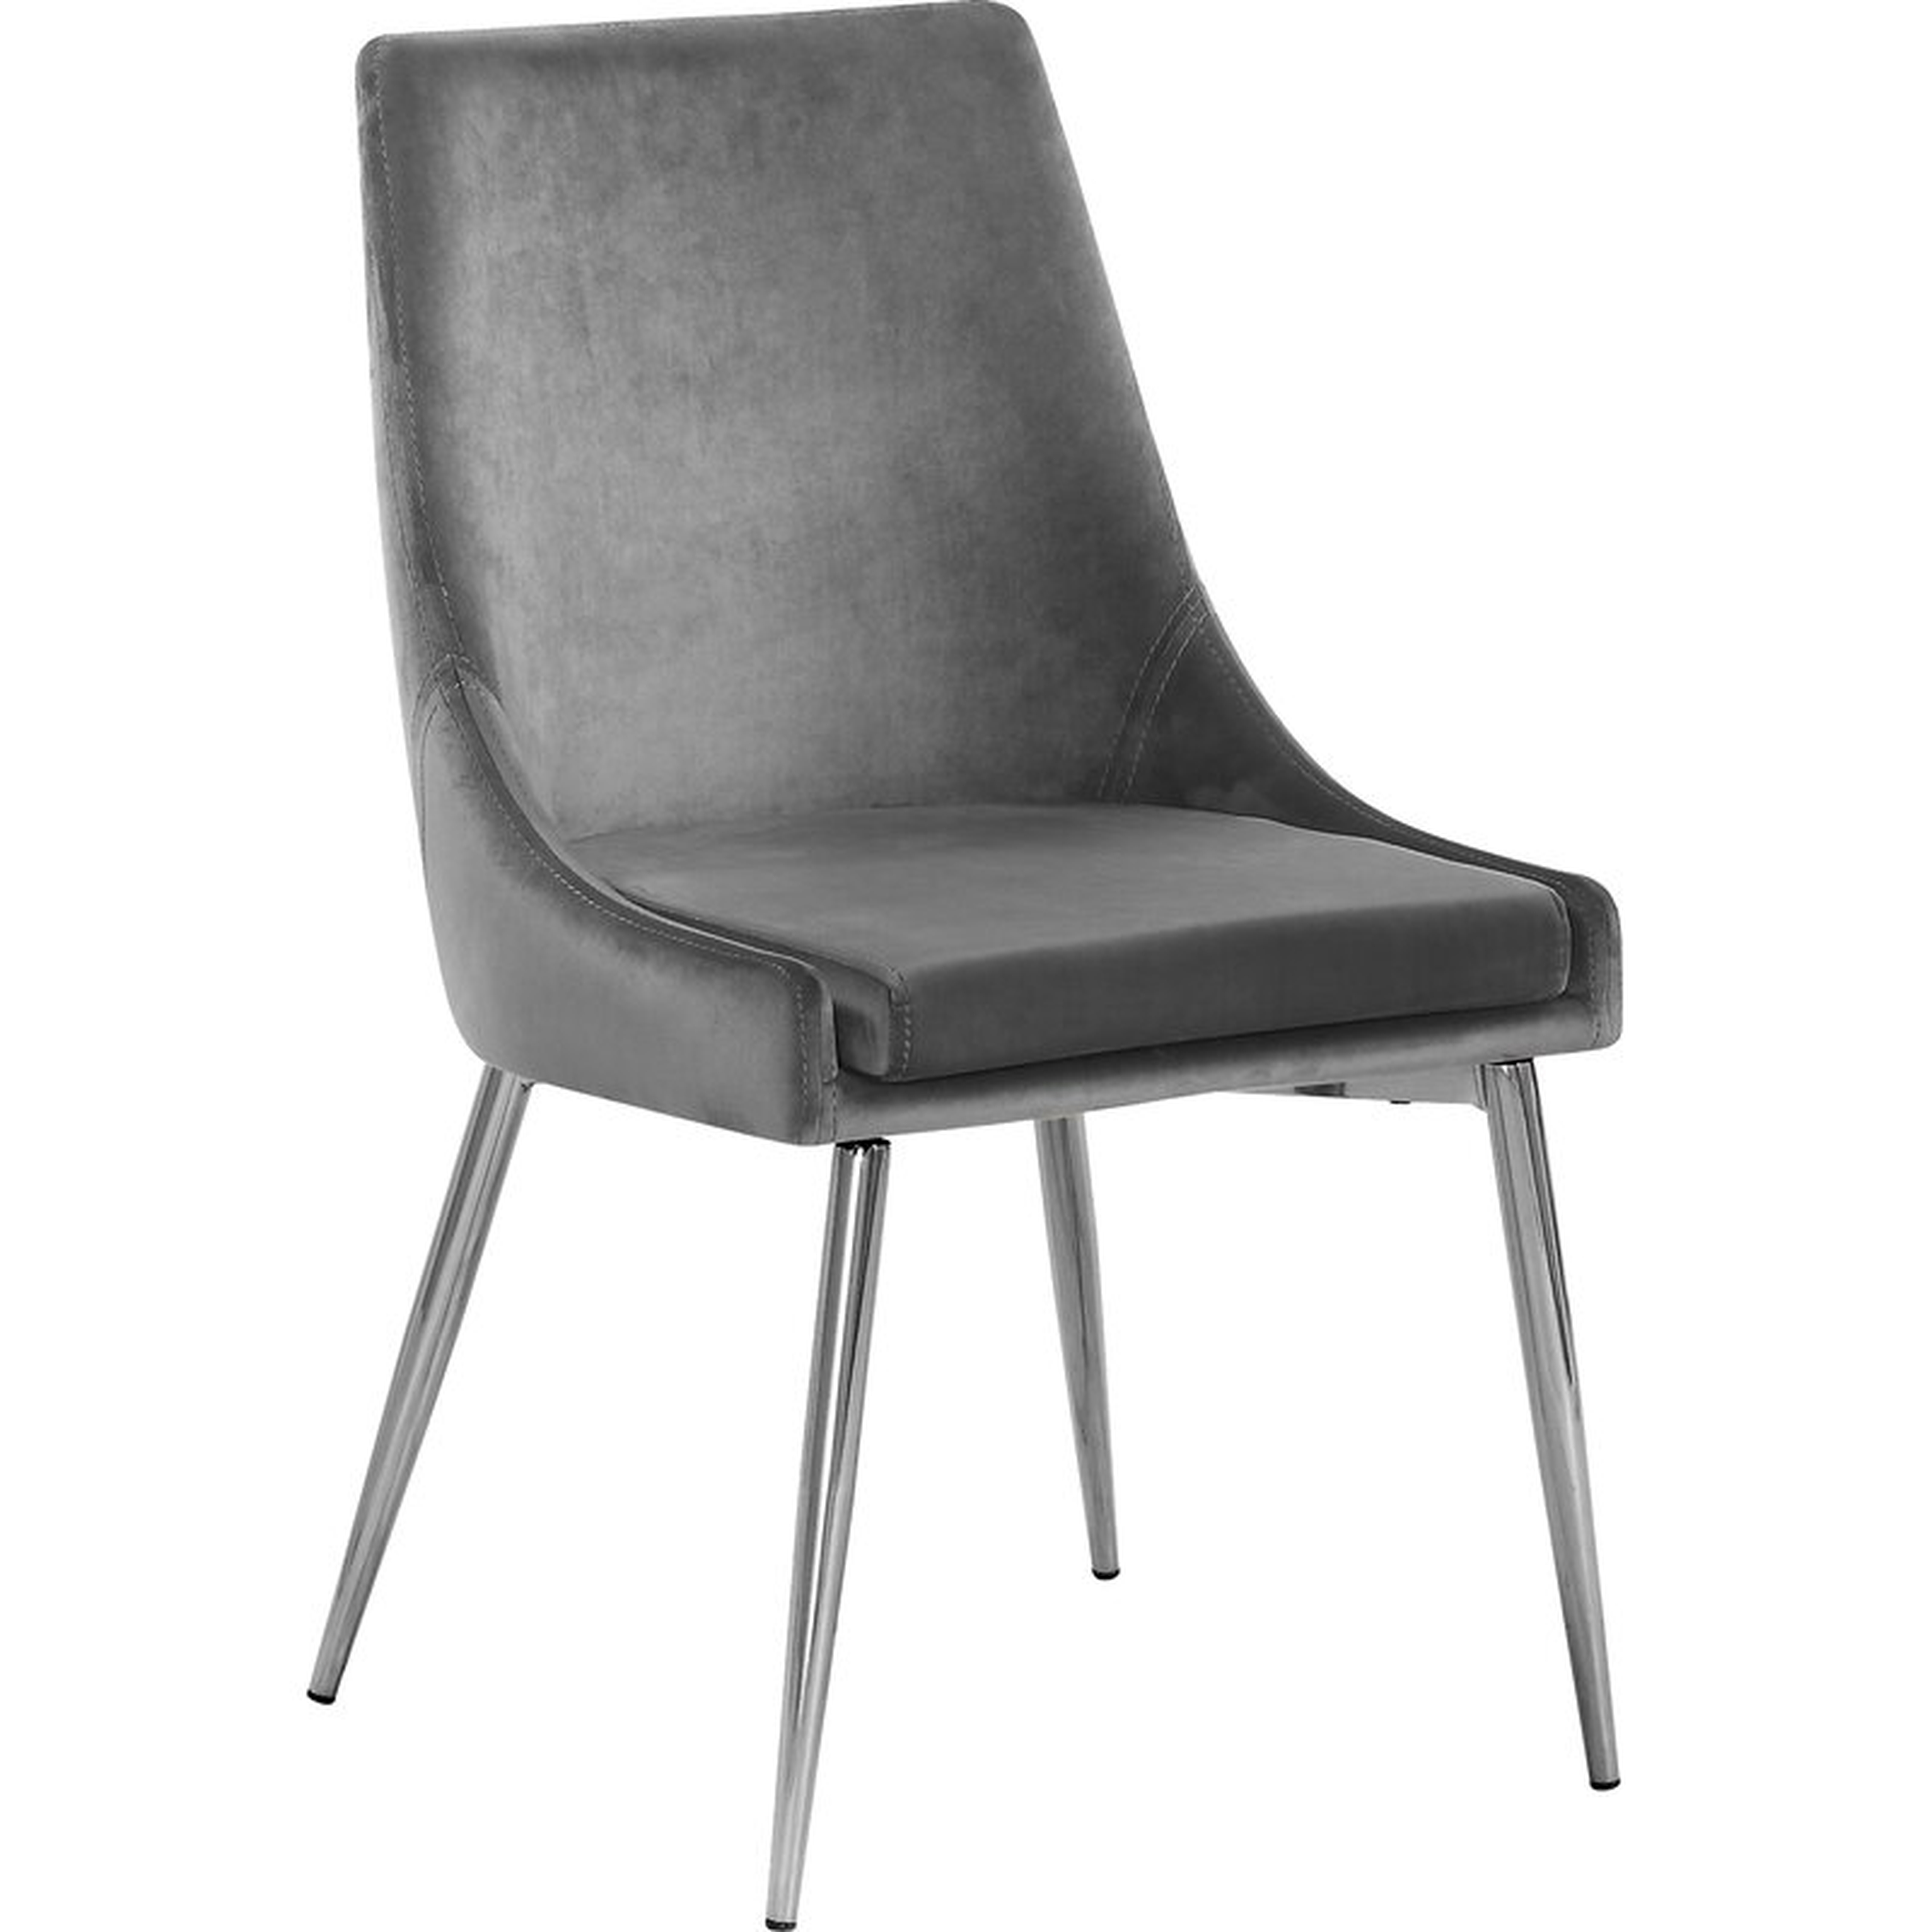 Ellenberger Upholstered Dining Chair (Set of 2)- Gray - Wayfair